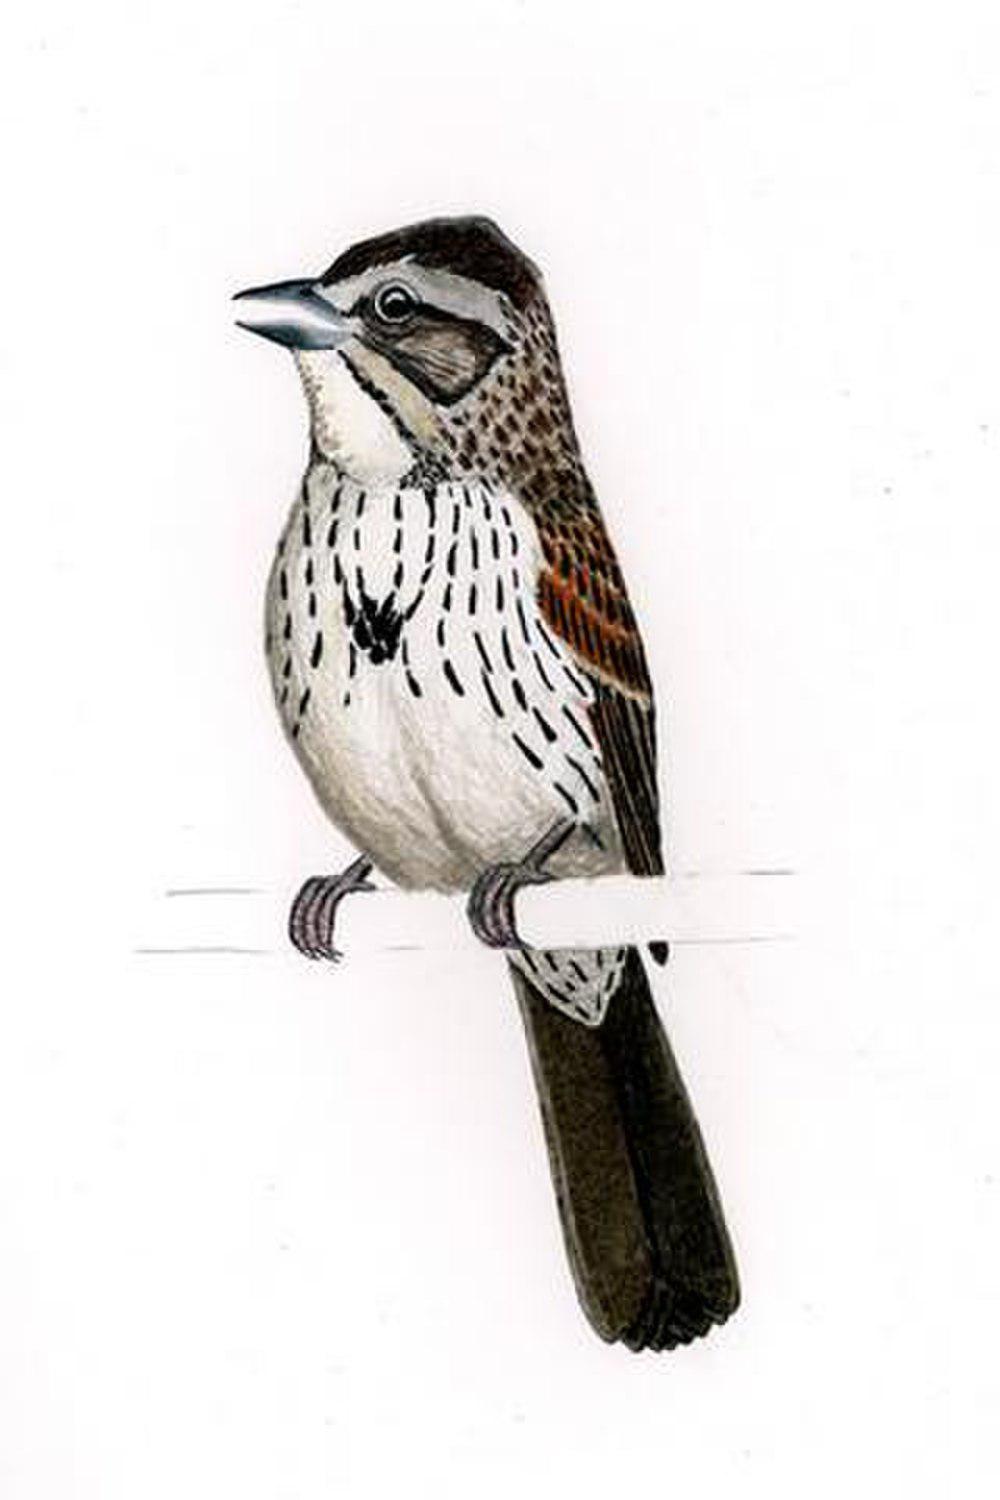 异雀鹀 / Sierra Madre Sparrow / Xenospiza baileyi